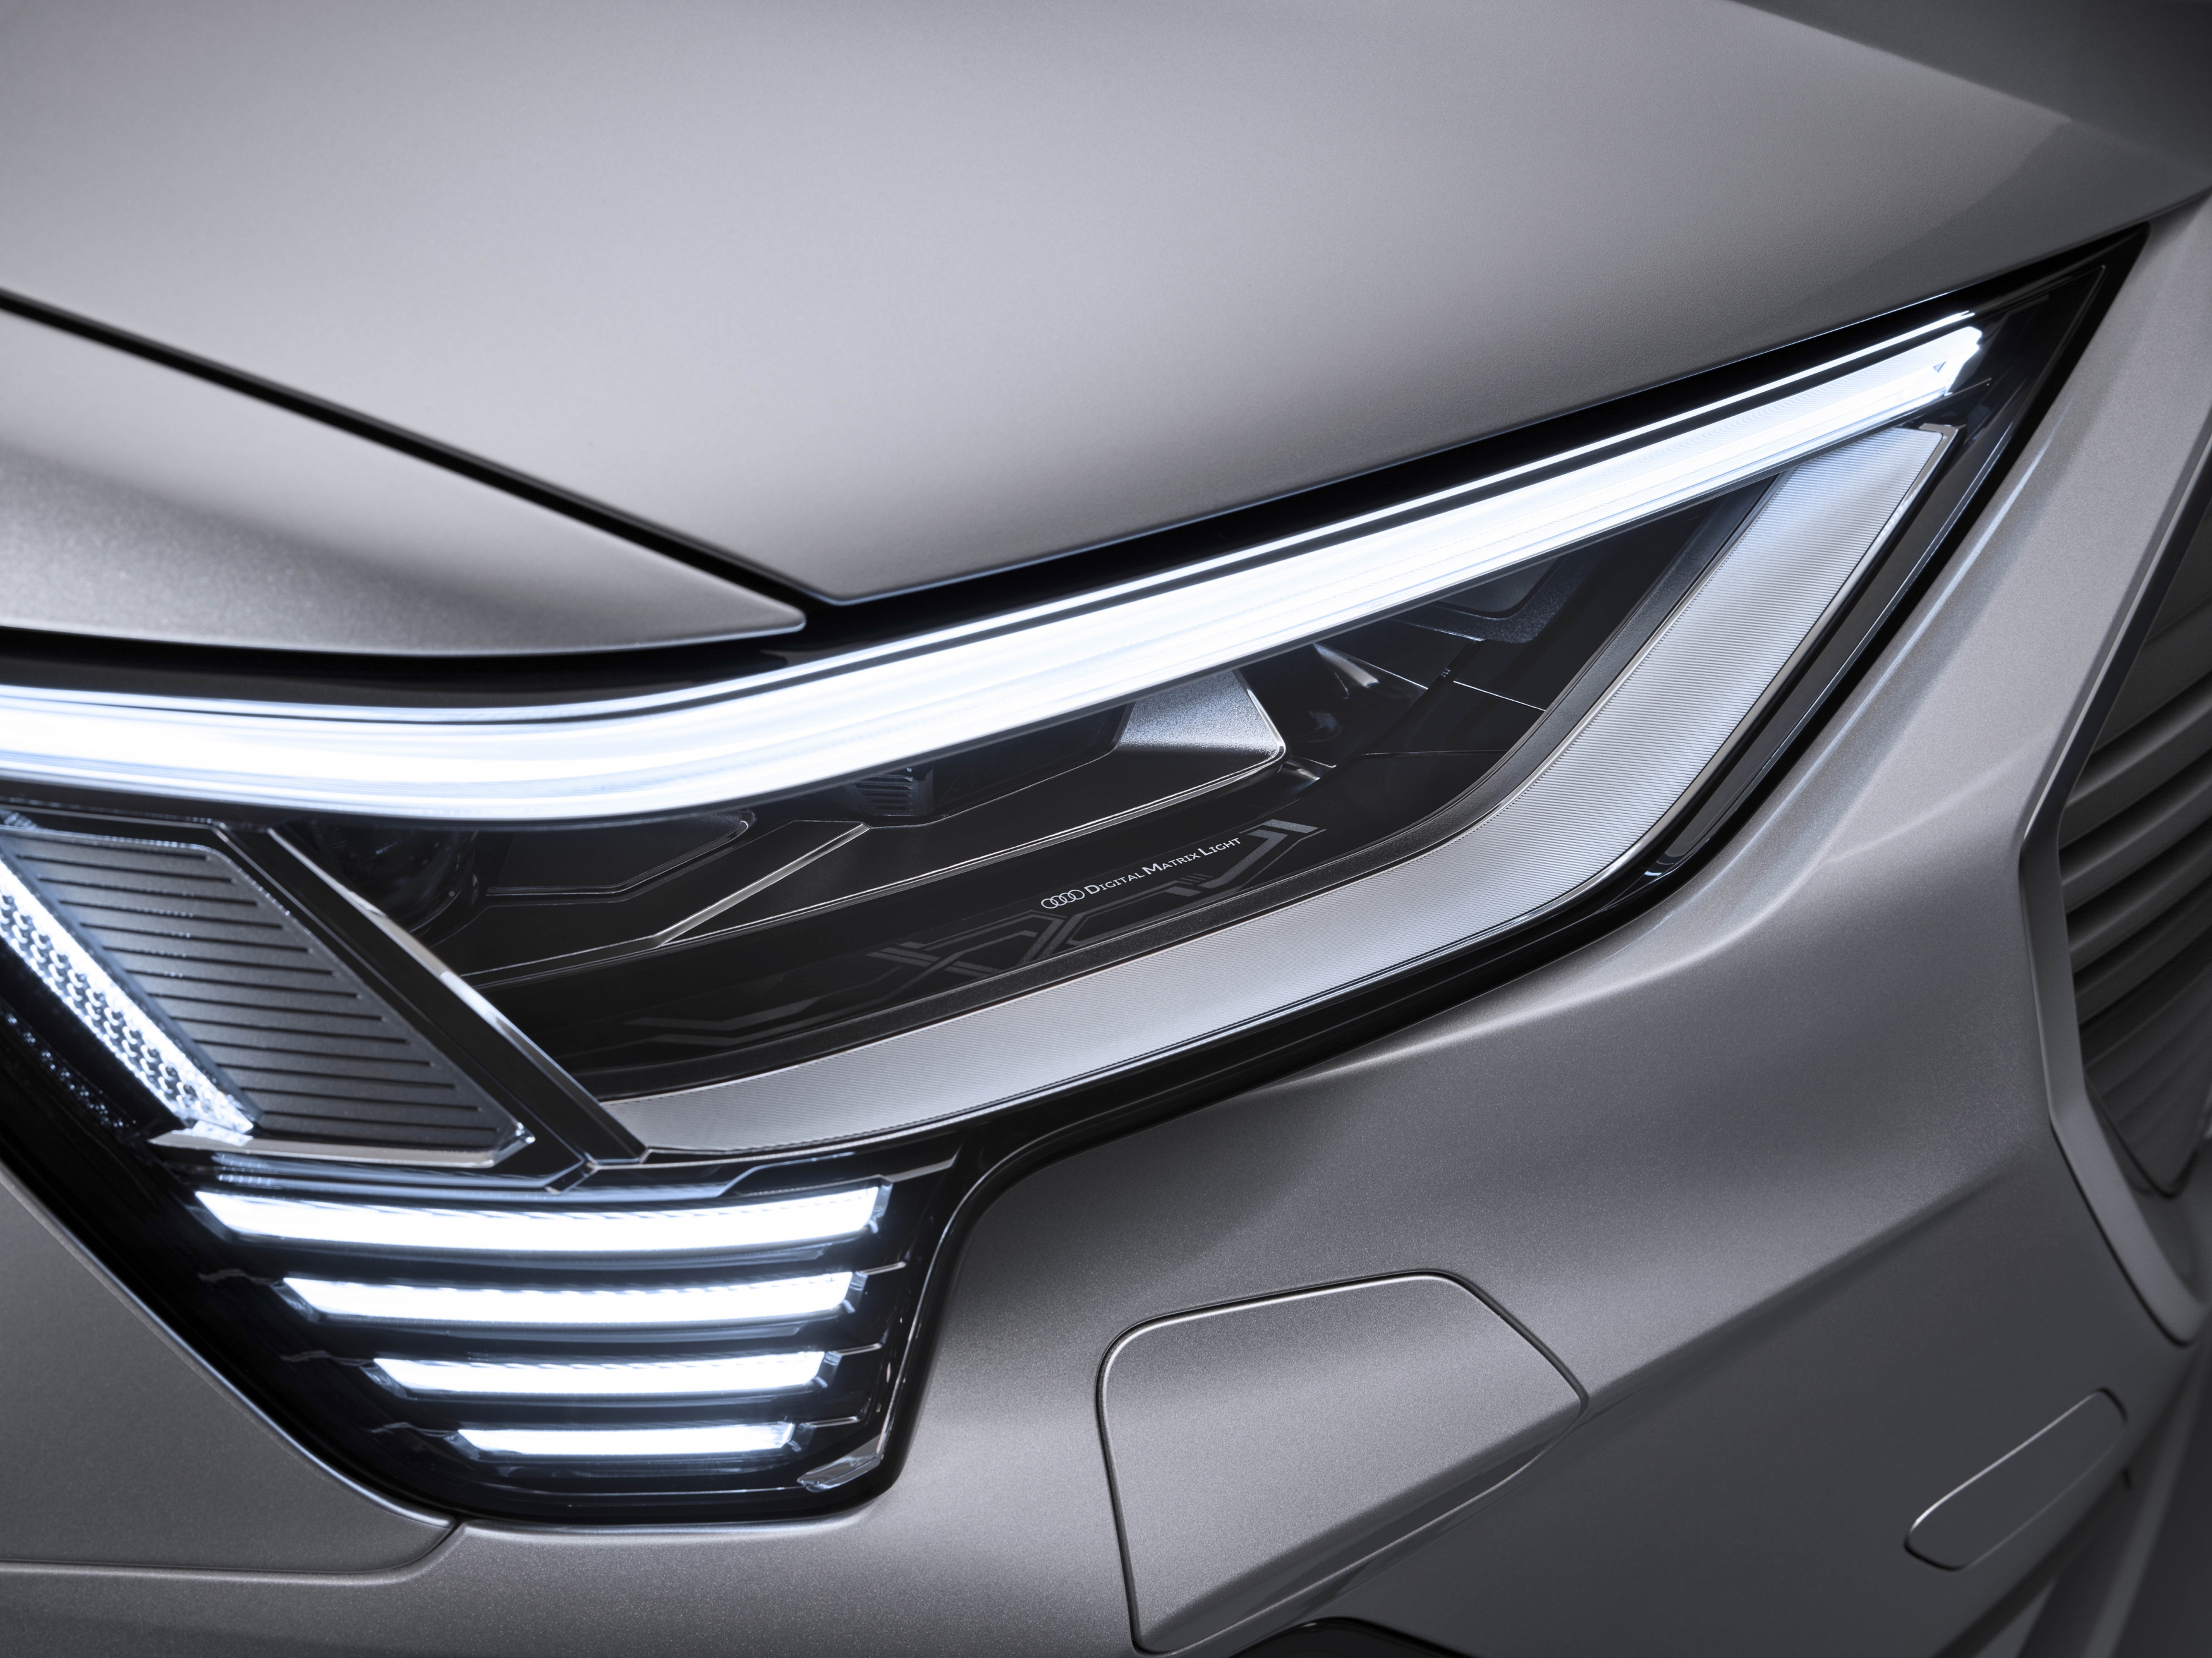 2021 Audi e-tron Offers First Production Animated Digital Matrix LED Headlights